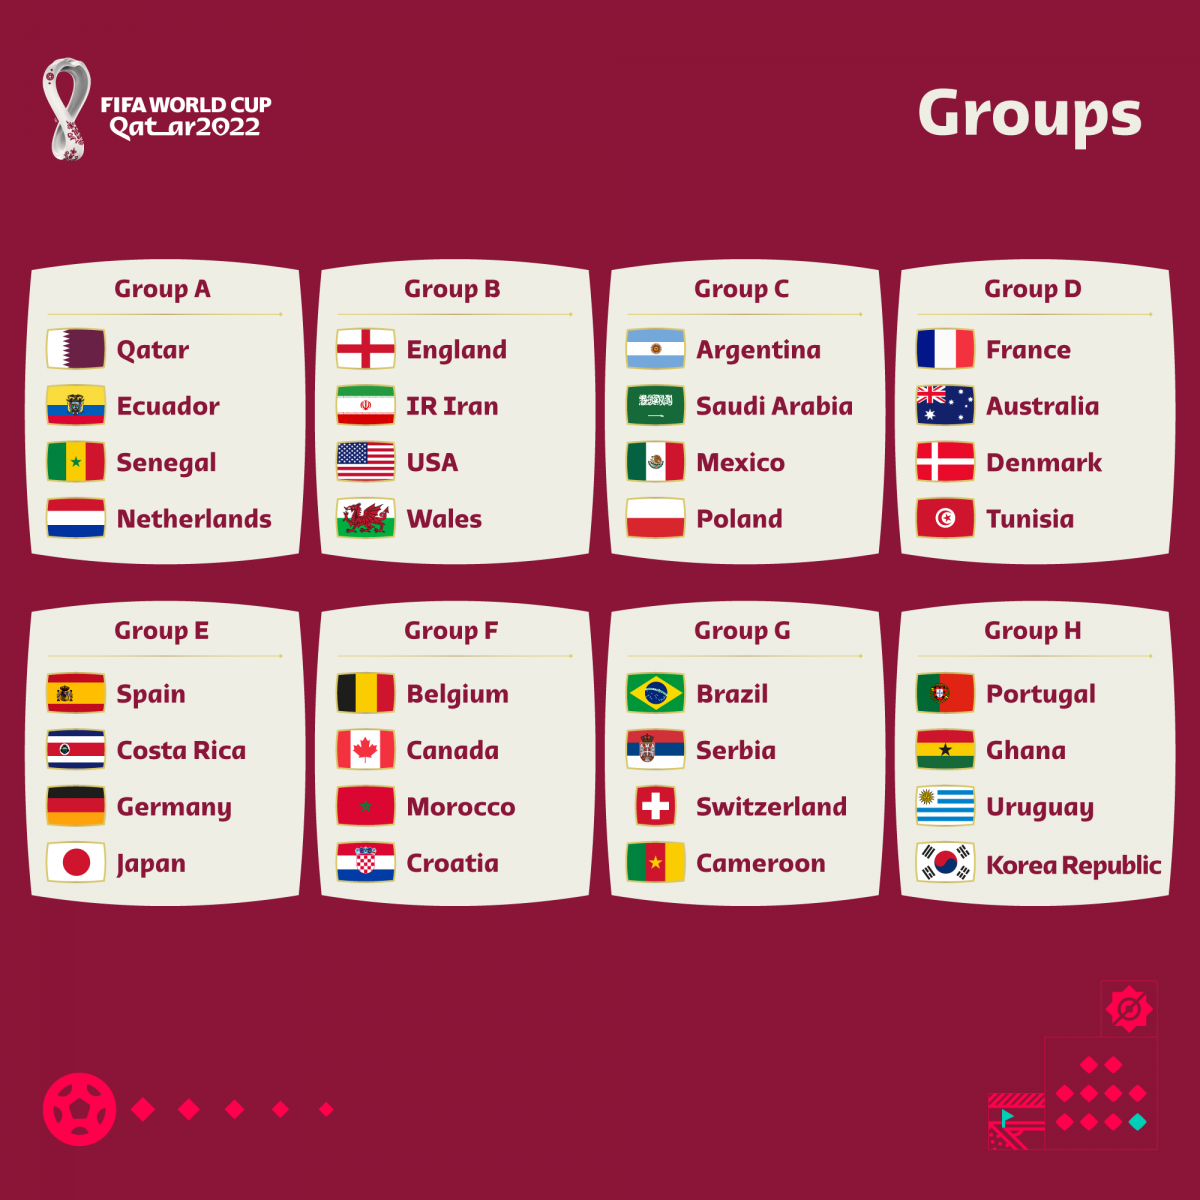 Calendario completo del Mundial de Qatar 2022, fechas, horarios partidos